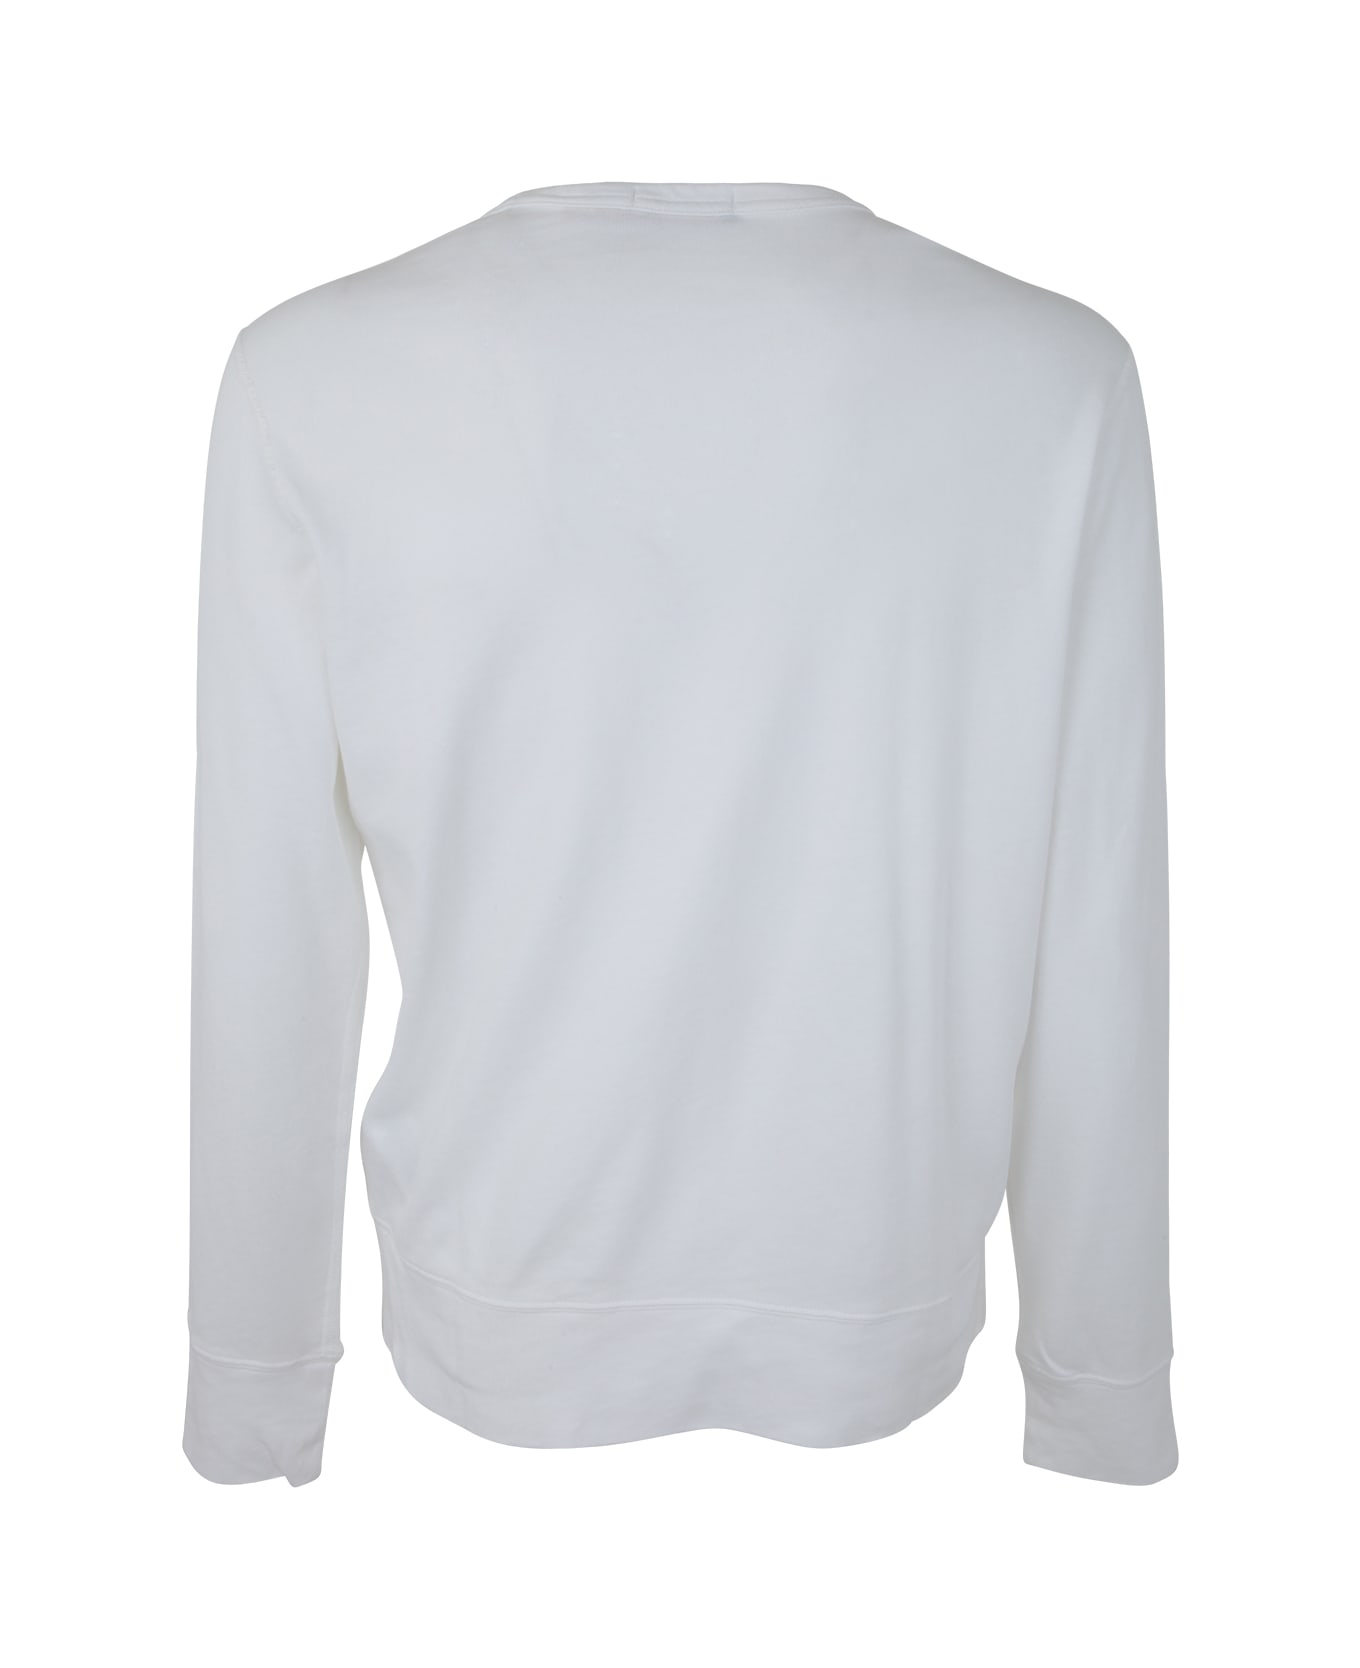 Polo Ralph Lauren Lscnm13 Long Sleeve Sweatshirt - White